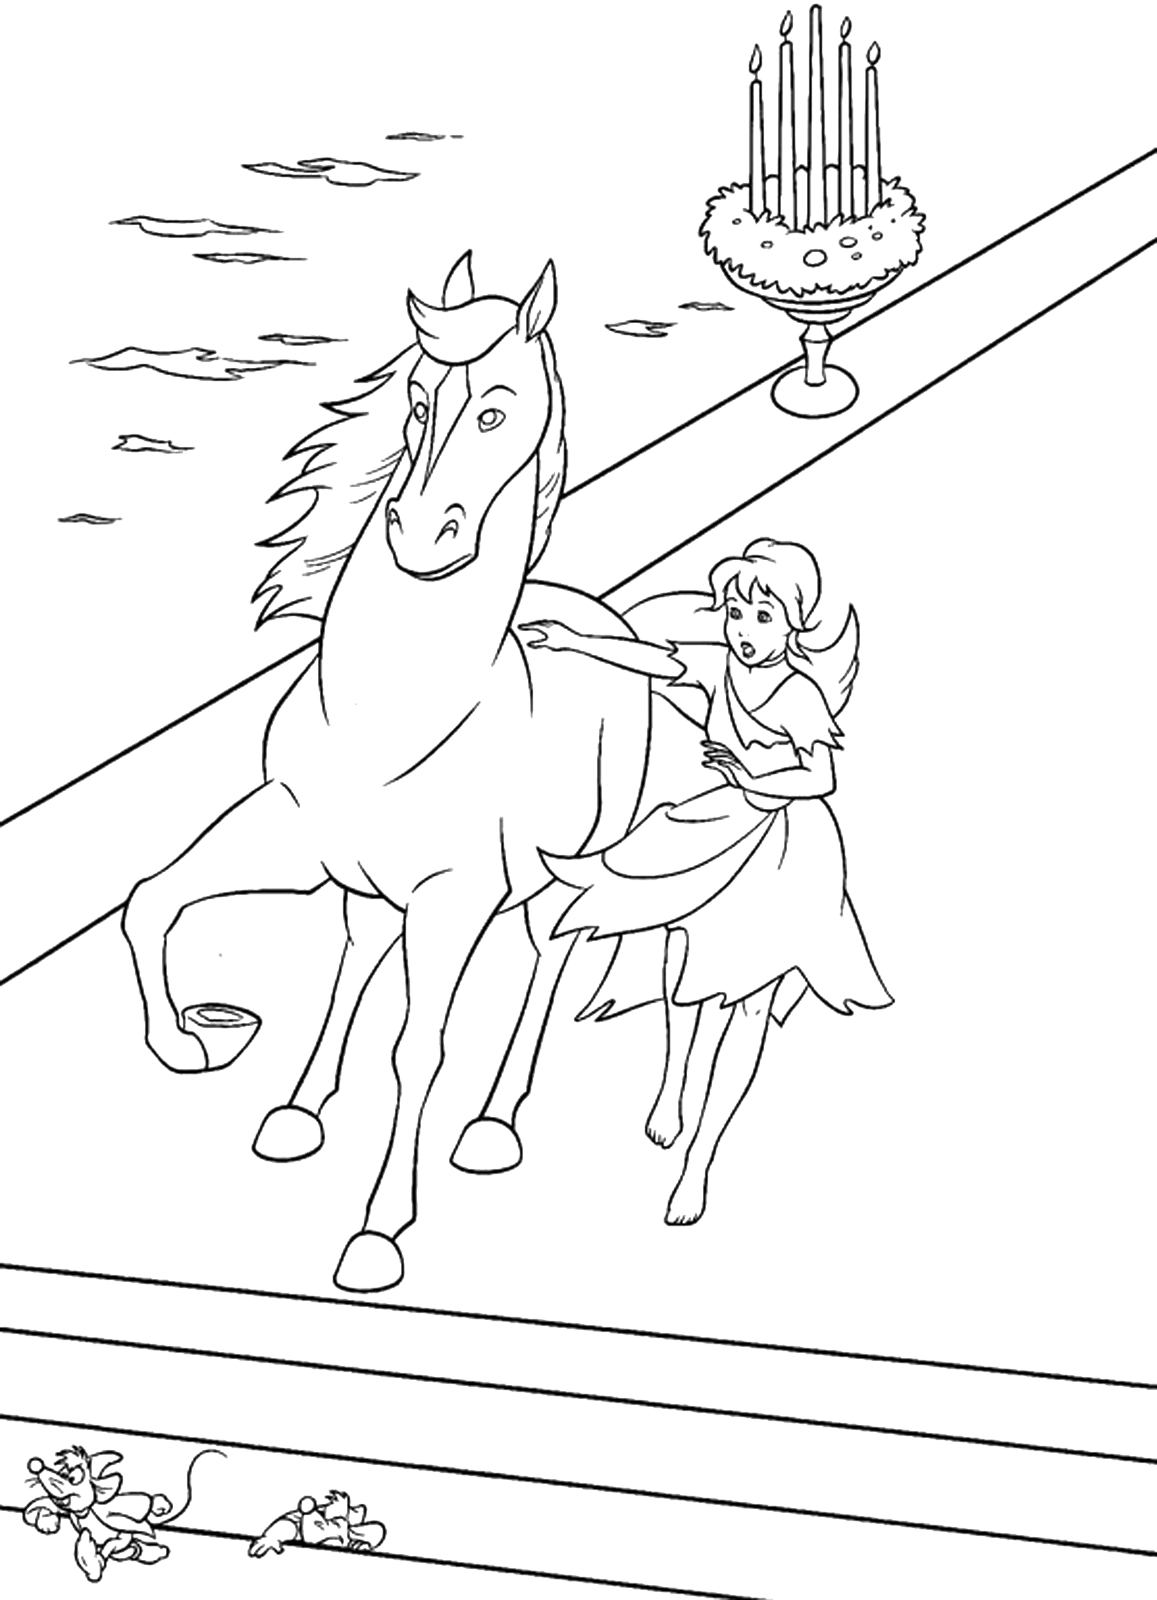 Cenerentola - Cenerentola ferma il cavallo mentre Giac e Gas scappano